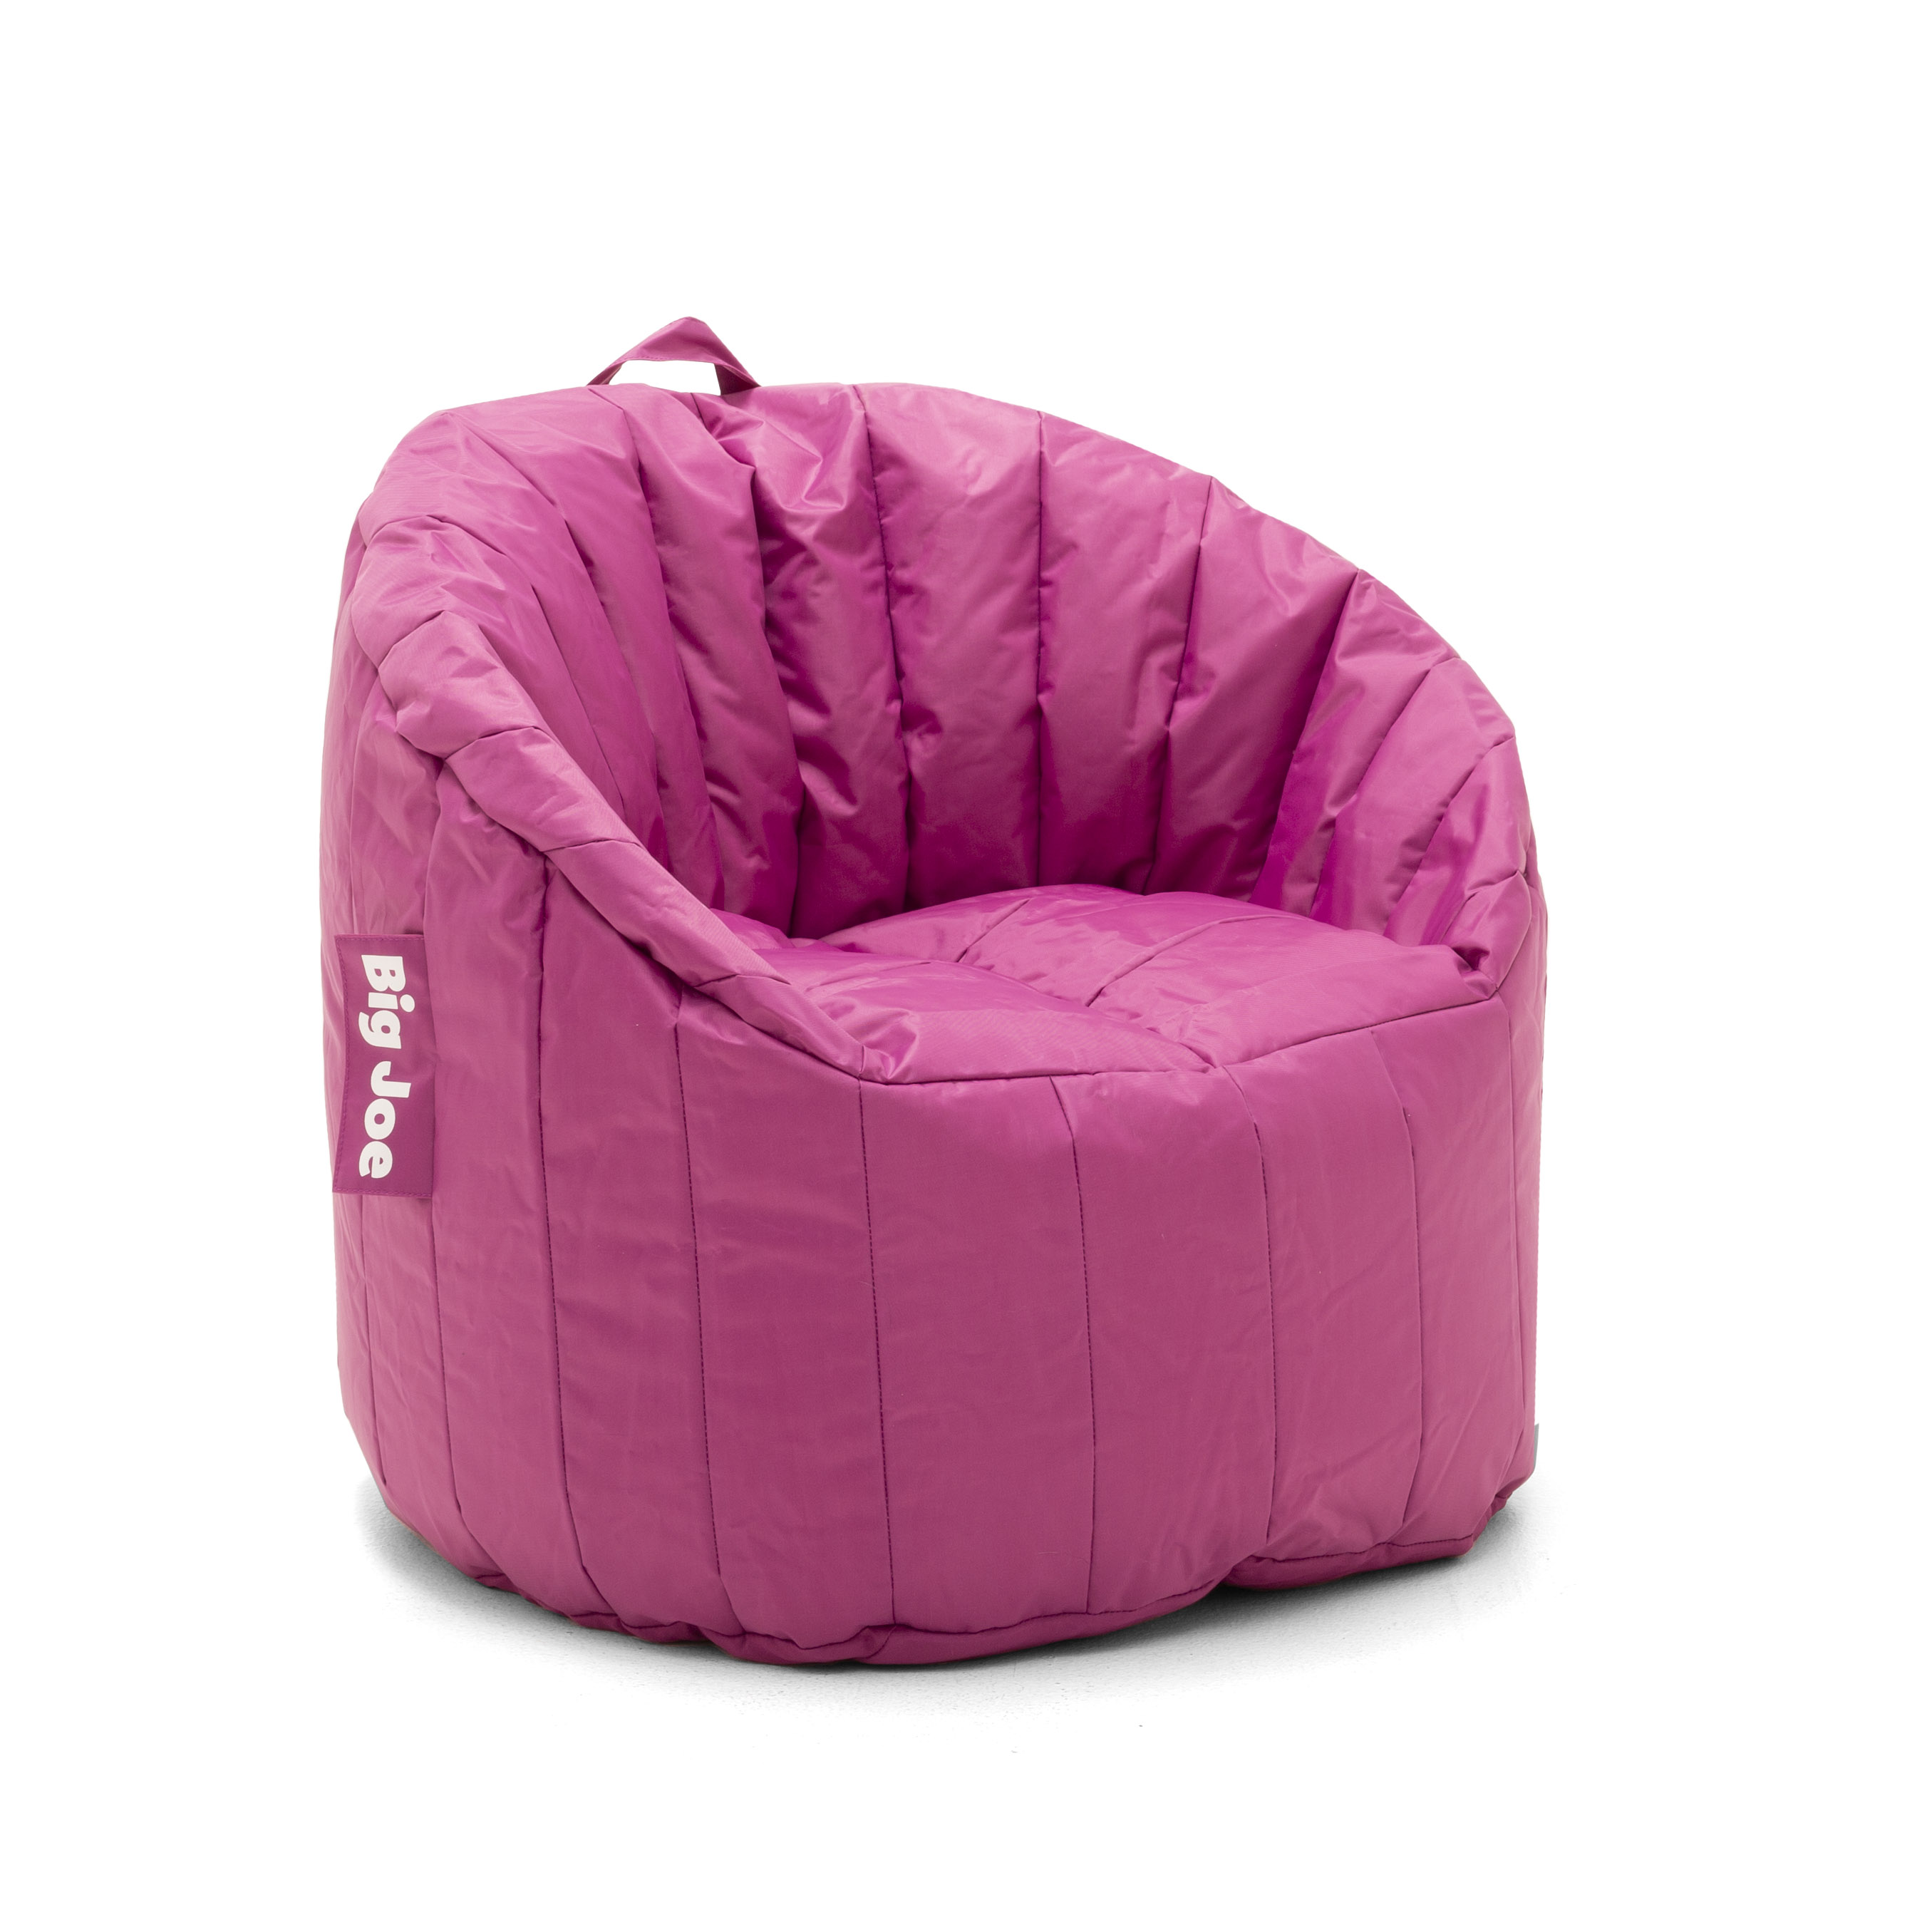 Big Joe Lumin Bean Bag Chair, Available in Multiple Colors - image 4 of 4